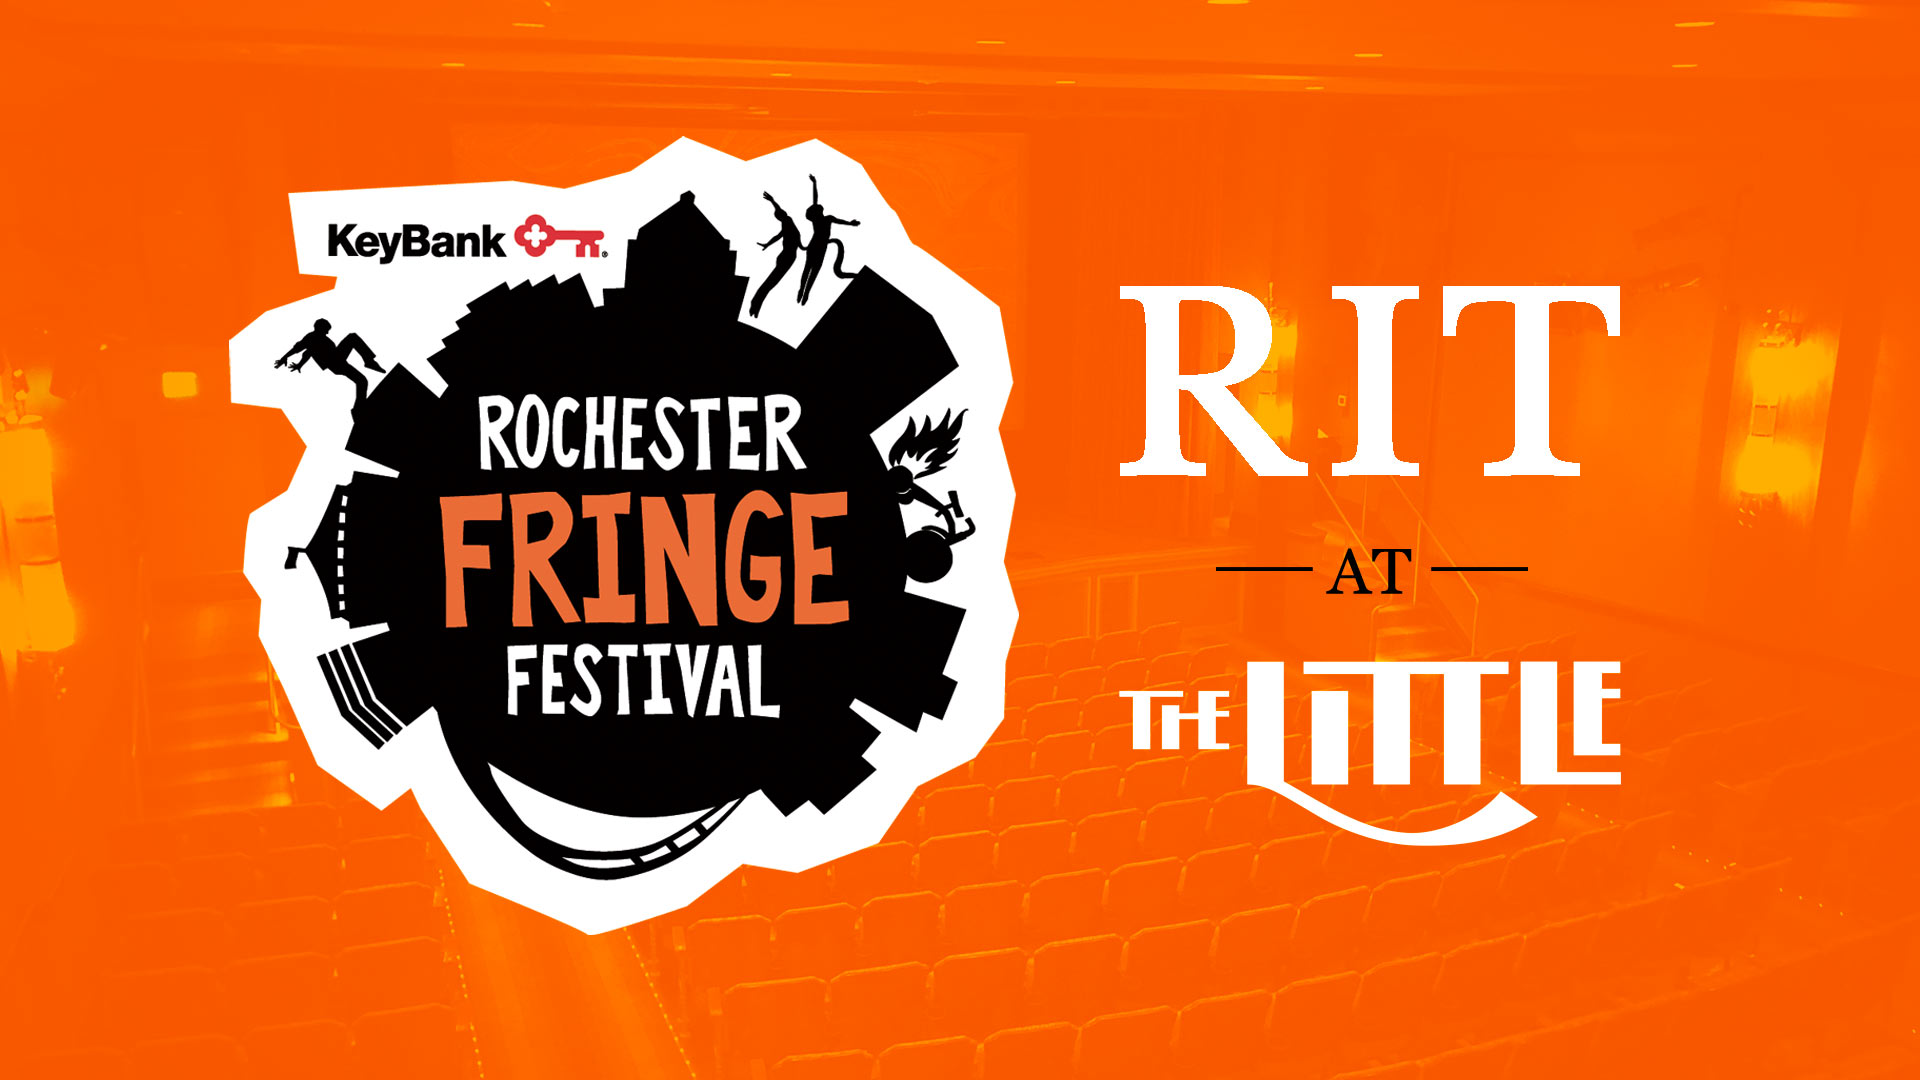 Rochester Fringe Festival 2021 The Little Theatre